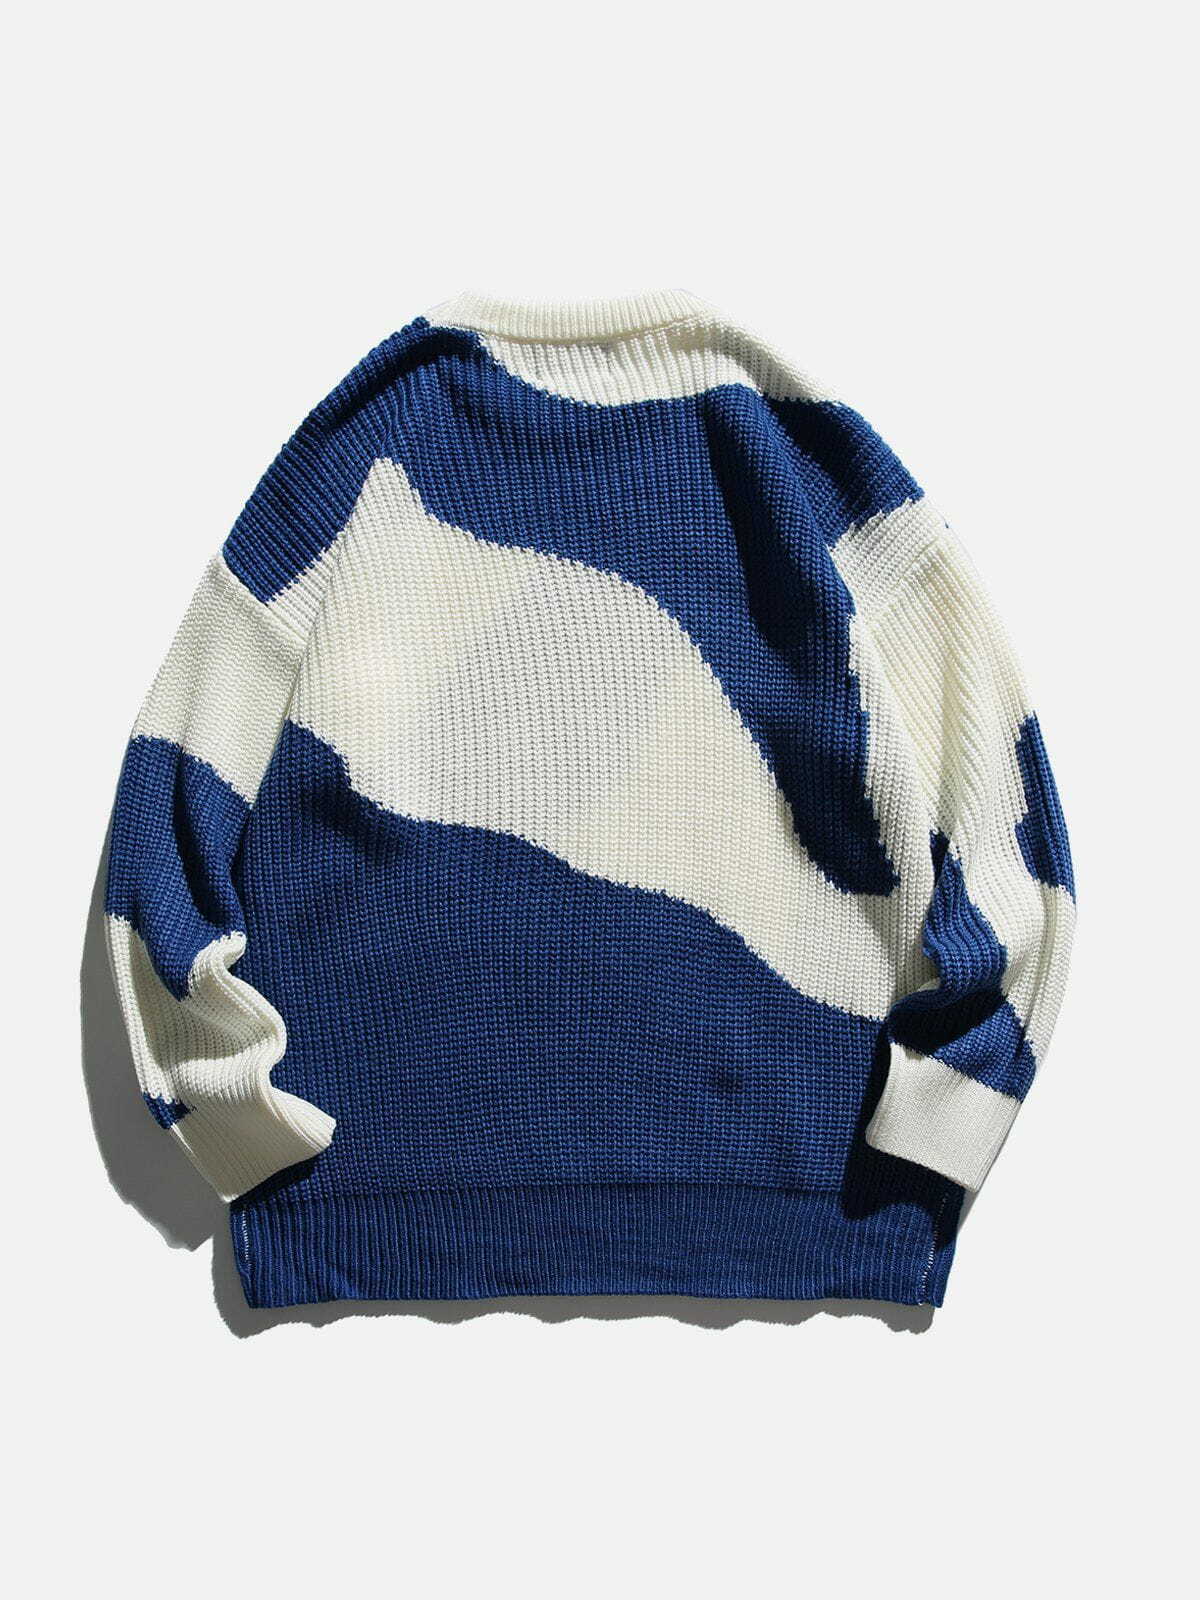 irregular contrast sweater edgy & urban streetwear icon 7300